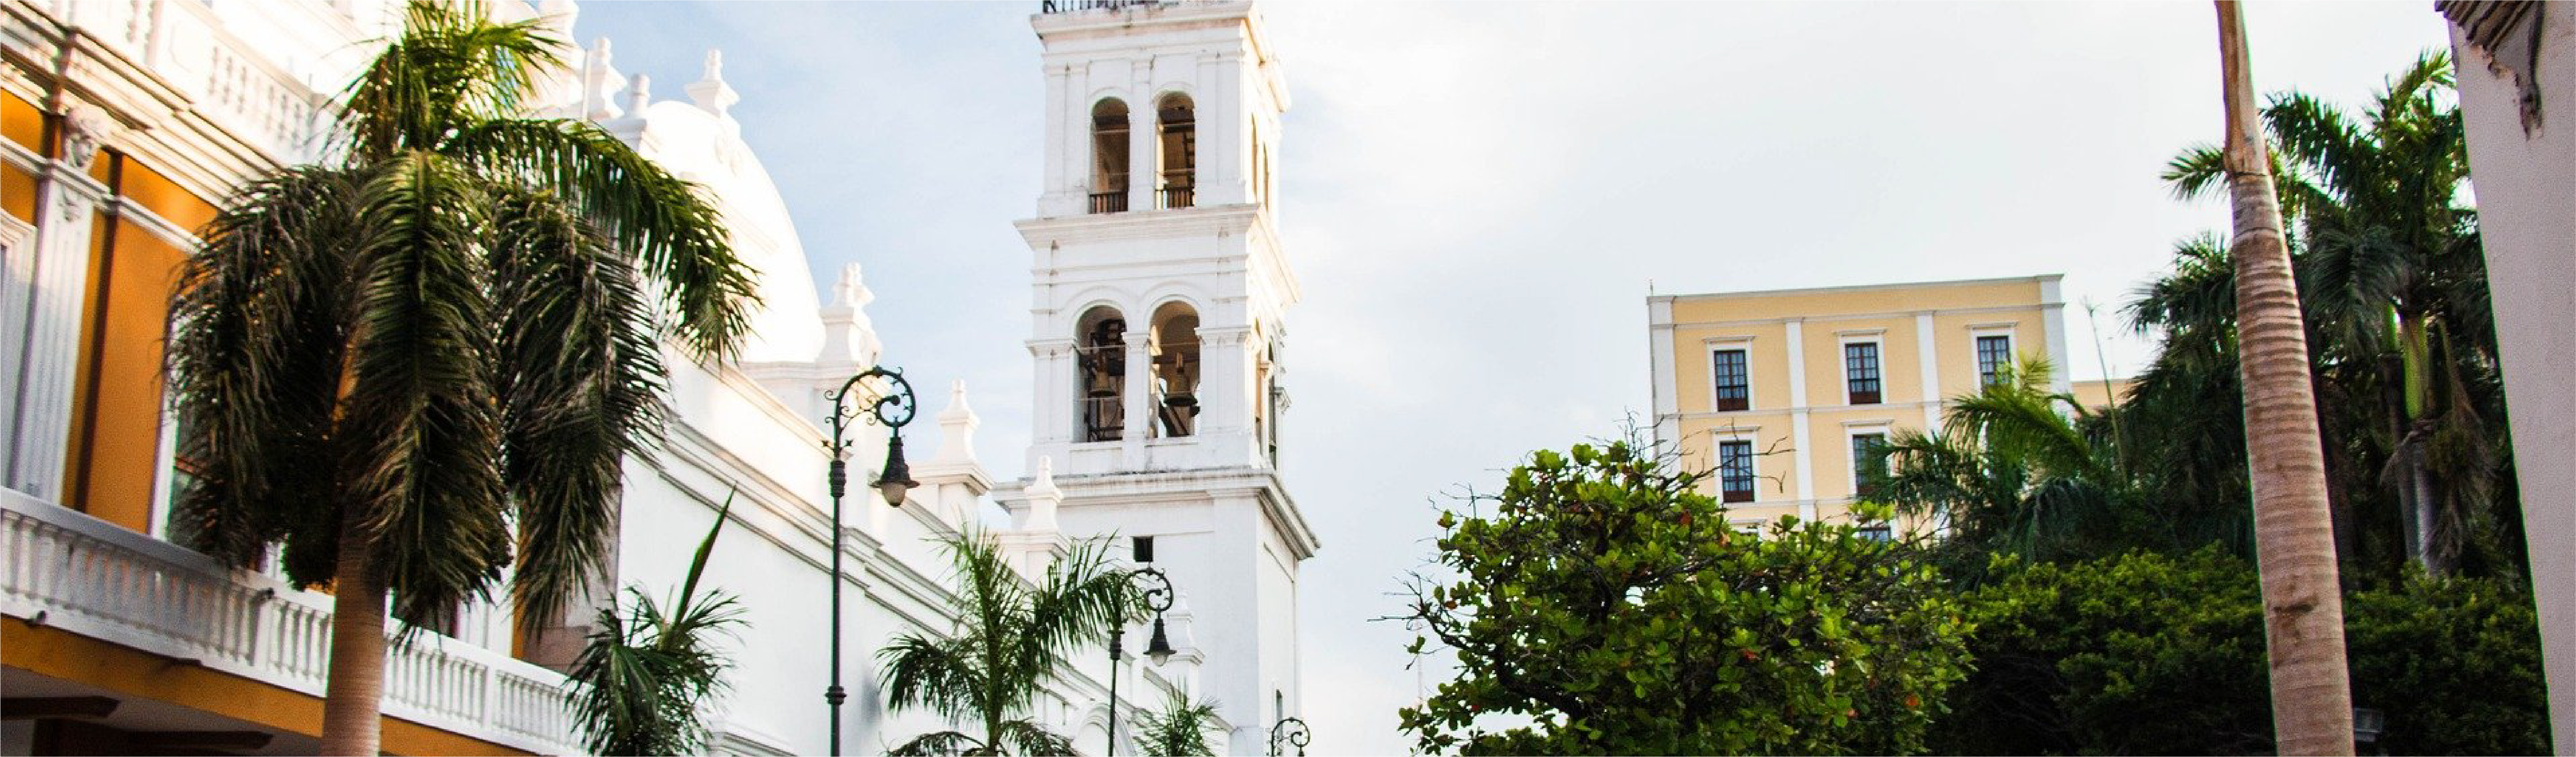 Centro Historico, Veracruz